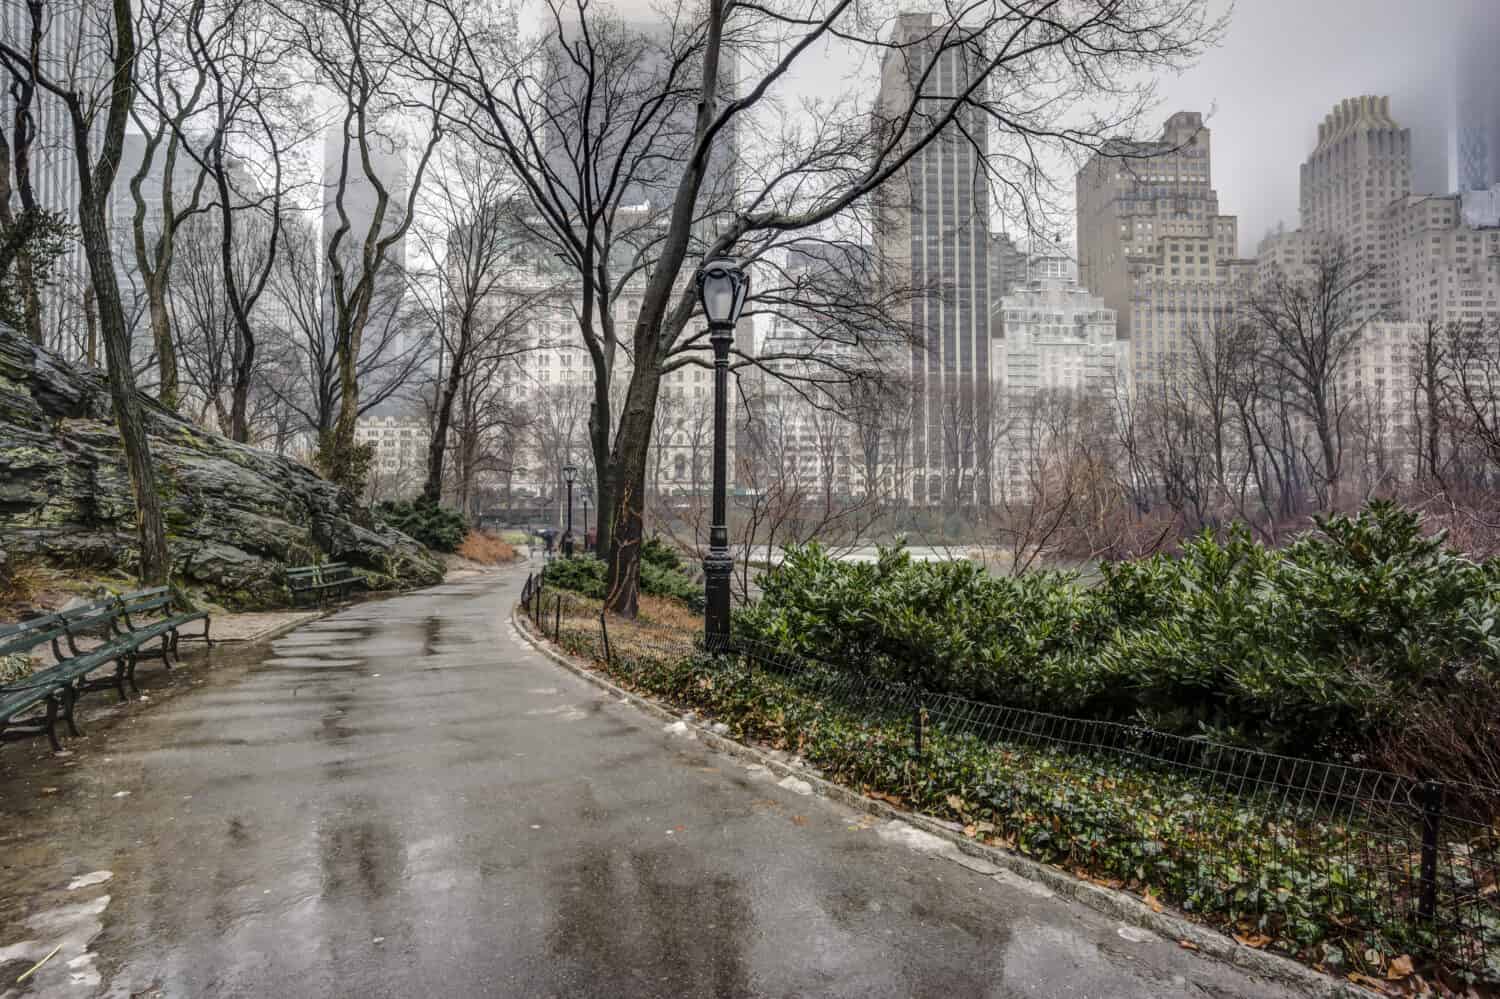 Central Park, New York City after rain storm on sidewalk